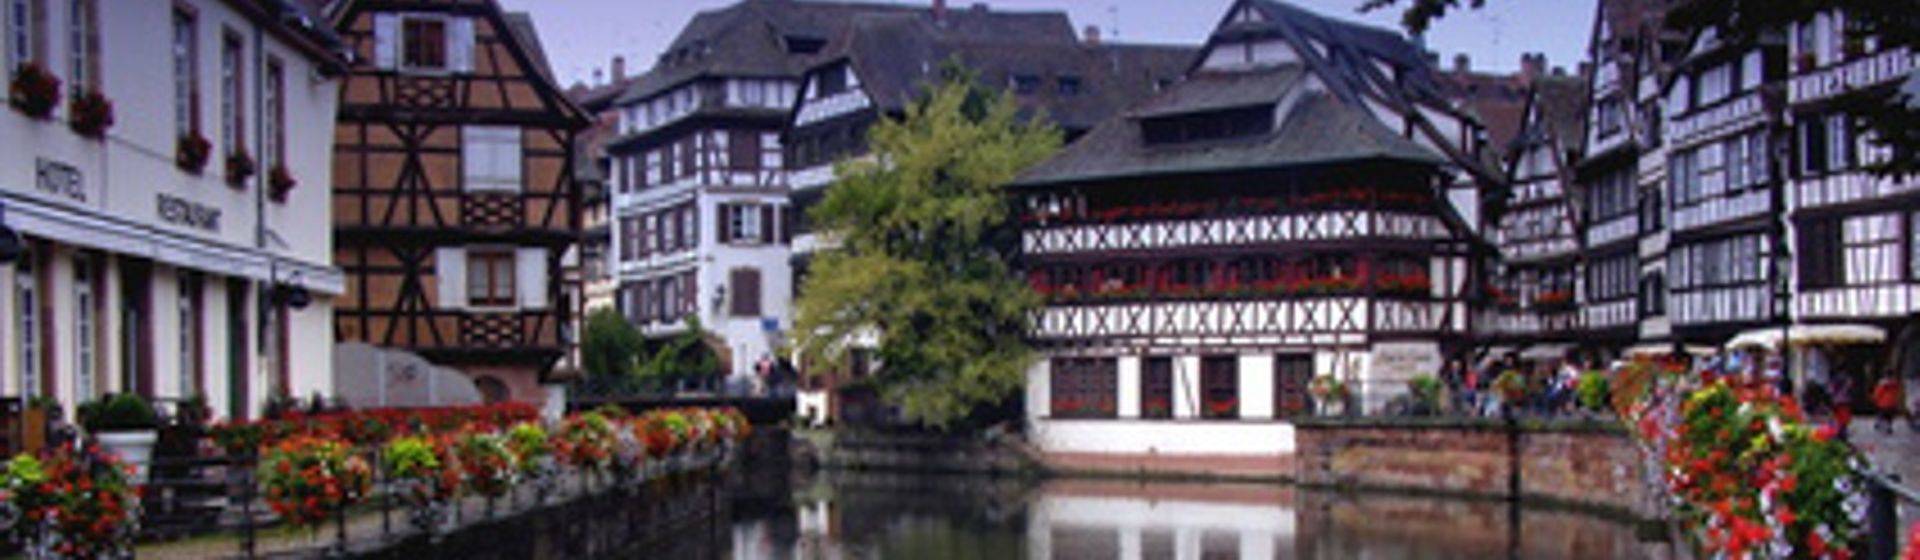 Holidays to Strasbourg Image